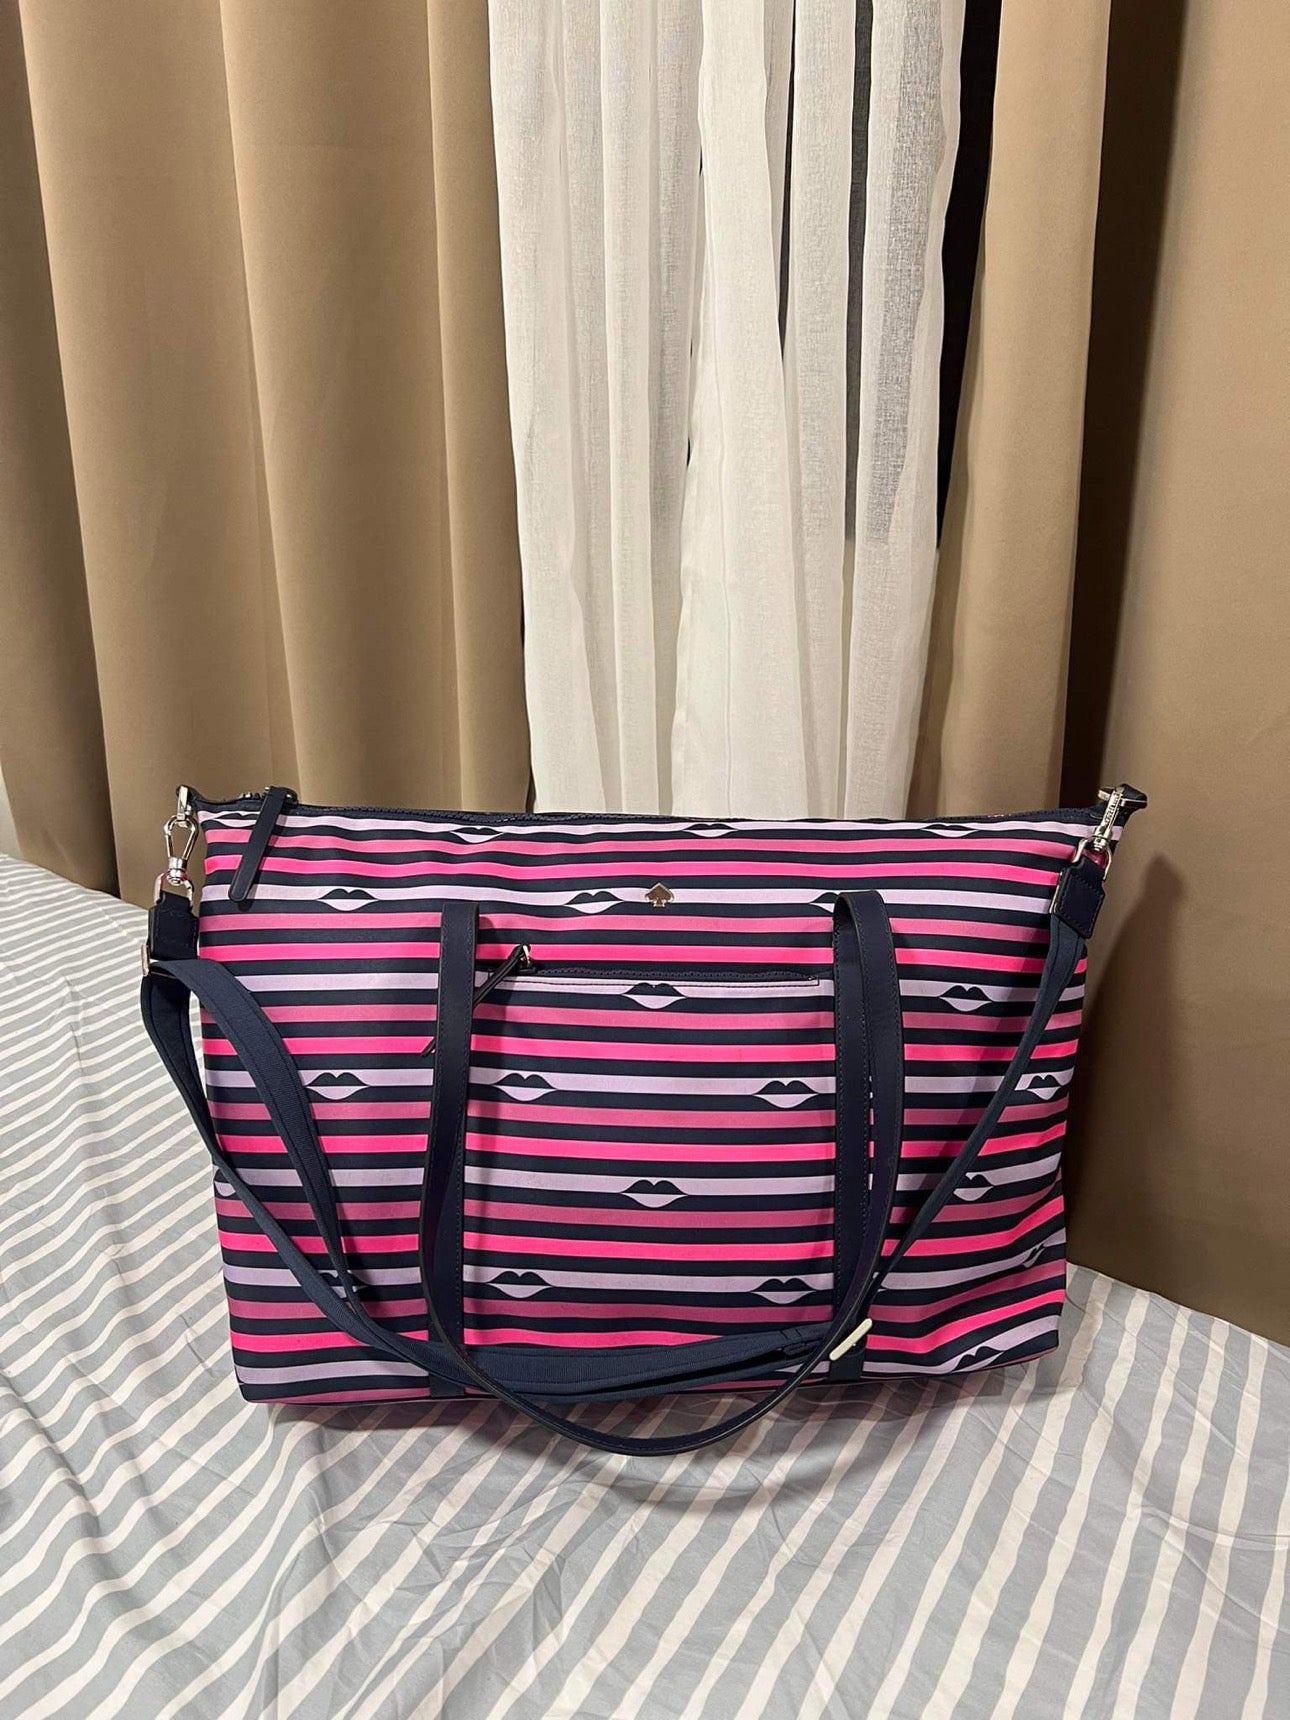 AUTHENTIC/ORIGINAL KateSpade KS Preloved Jae Weekender Large Travel Nylon Pink Bag